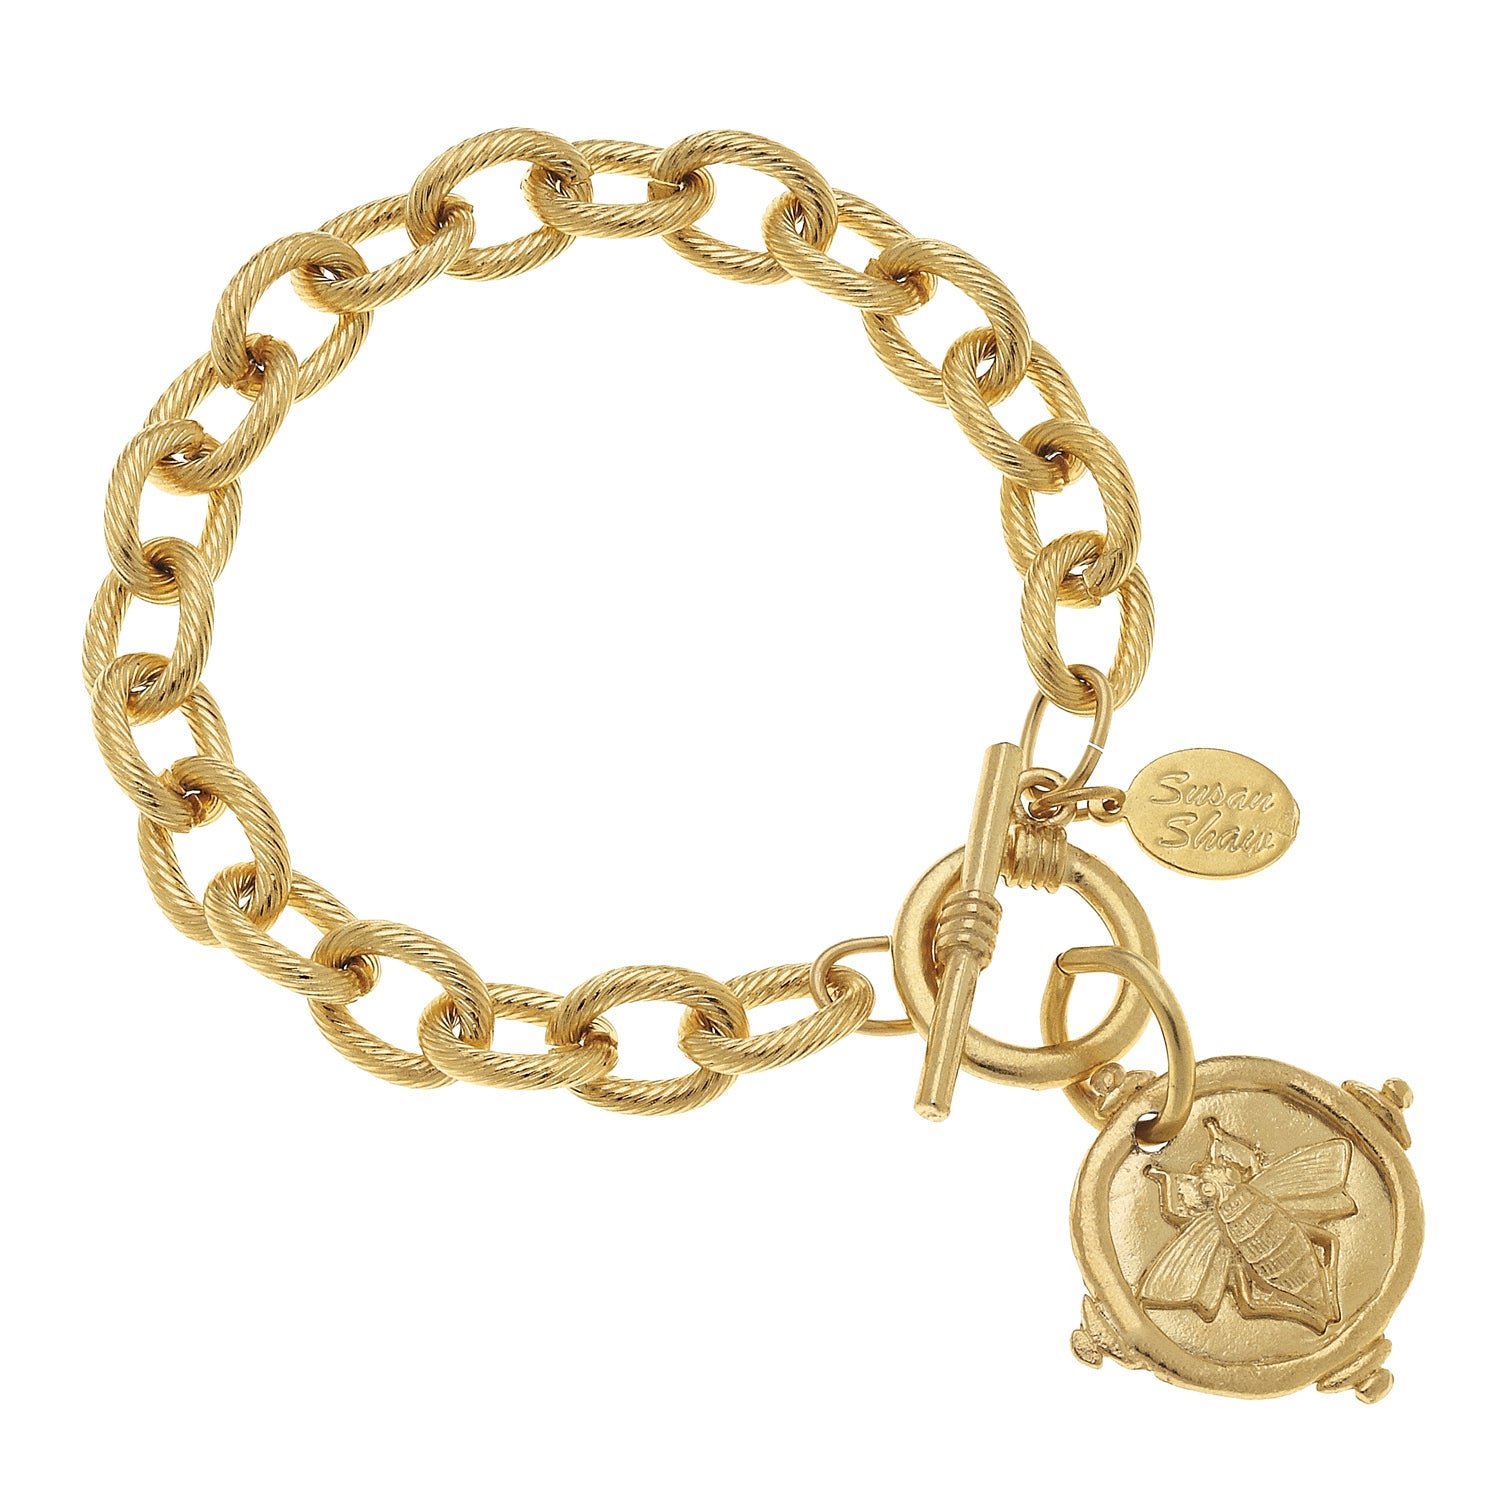 Susan Shaw Handcast Gold Intaglio "Bee" Bracelet